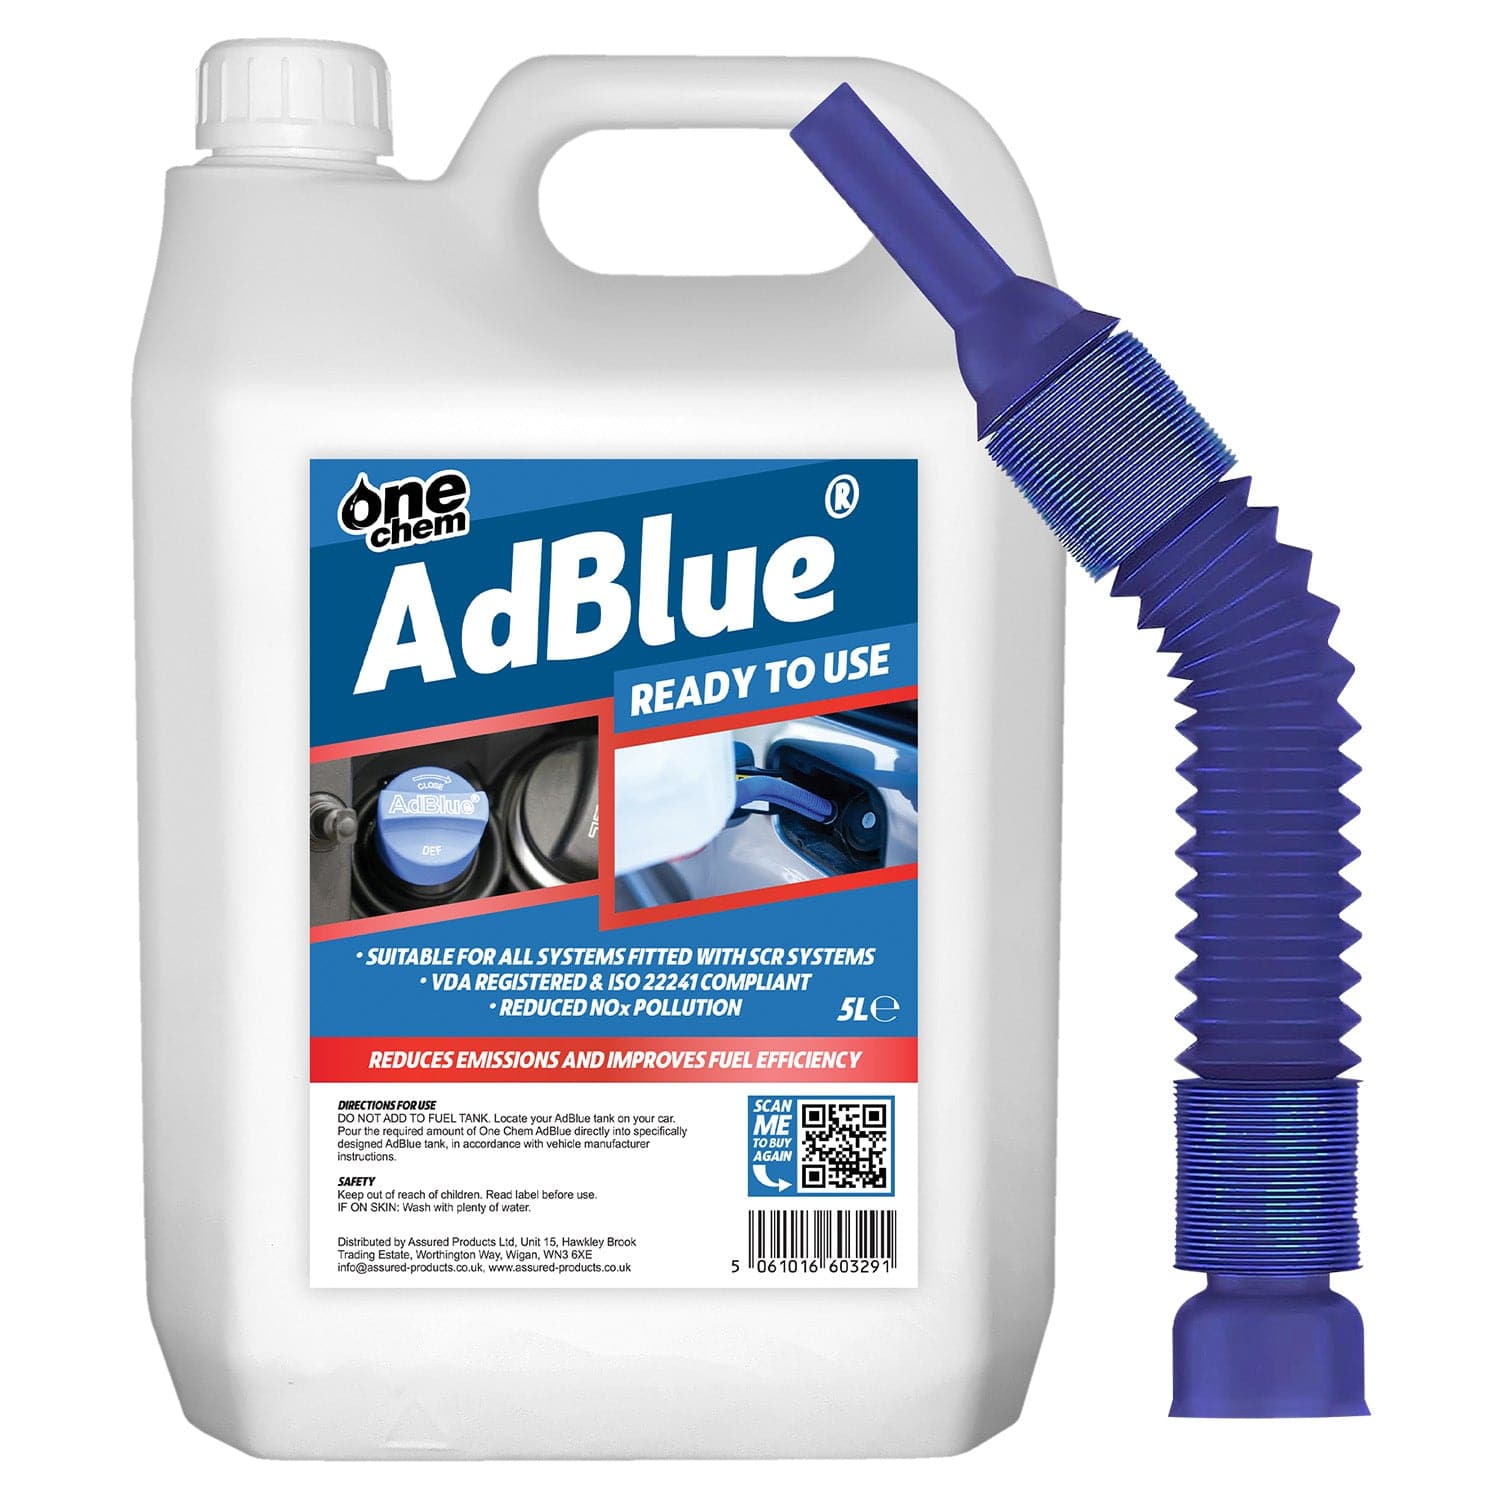 One Chem AdBlue Diesel Exhaust Fluid Additive, 5 Litres, Easy Pour Spout